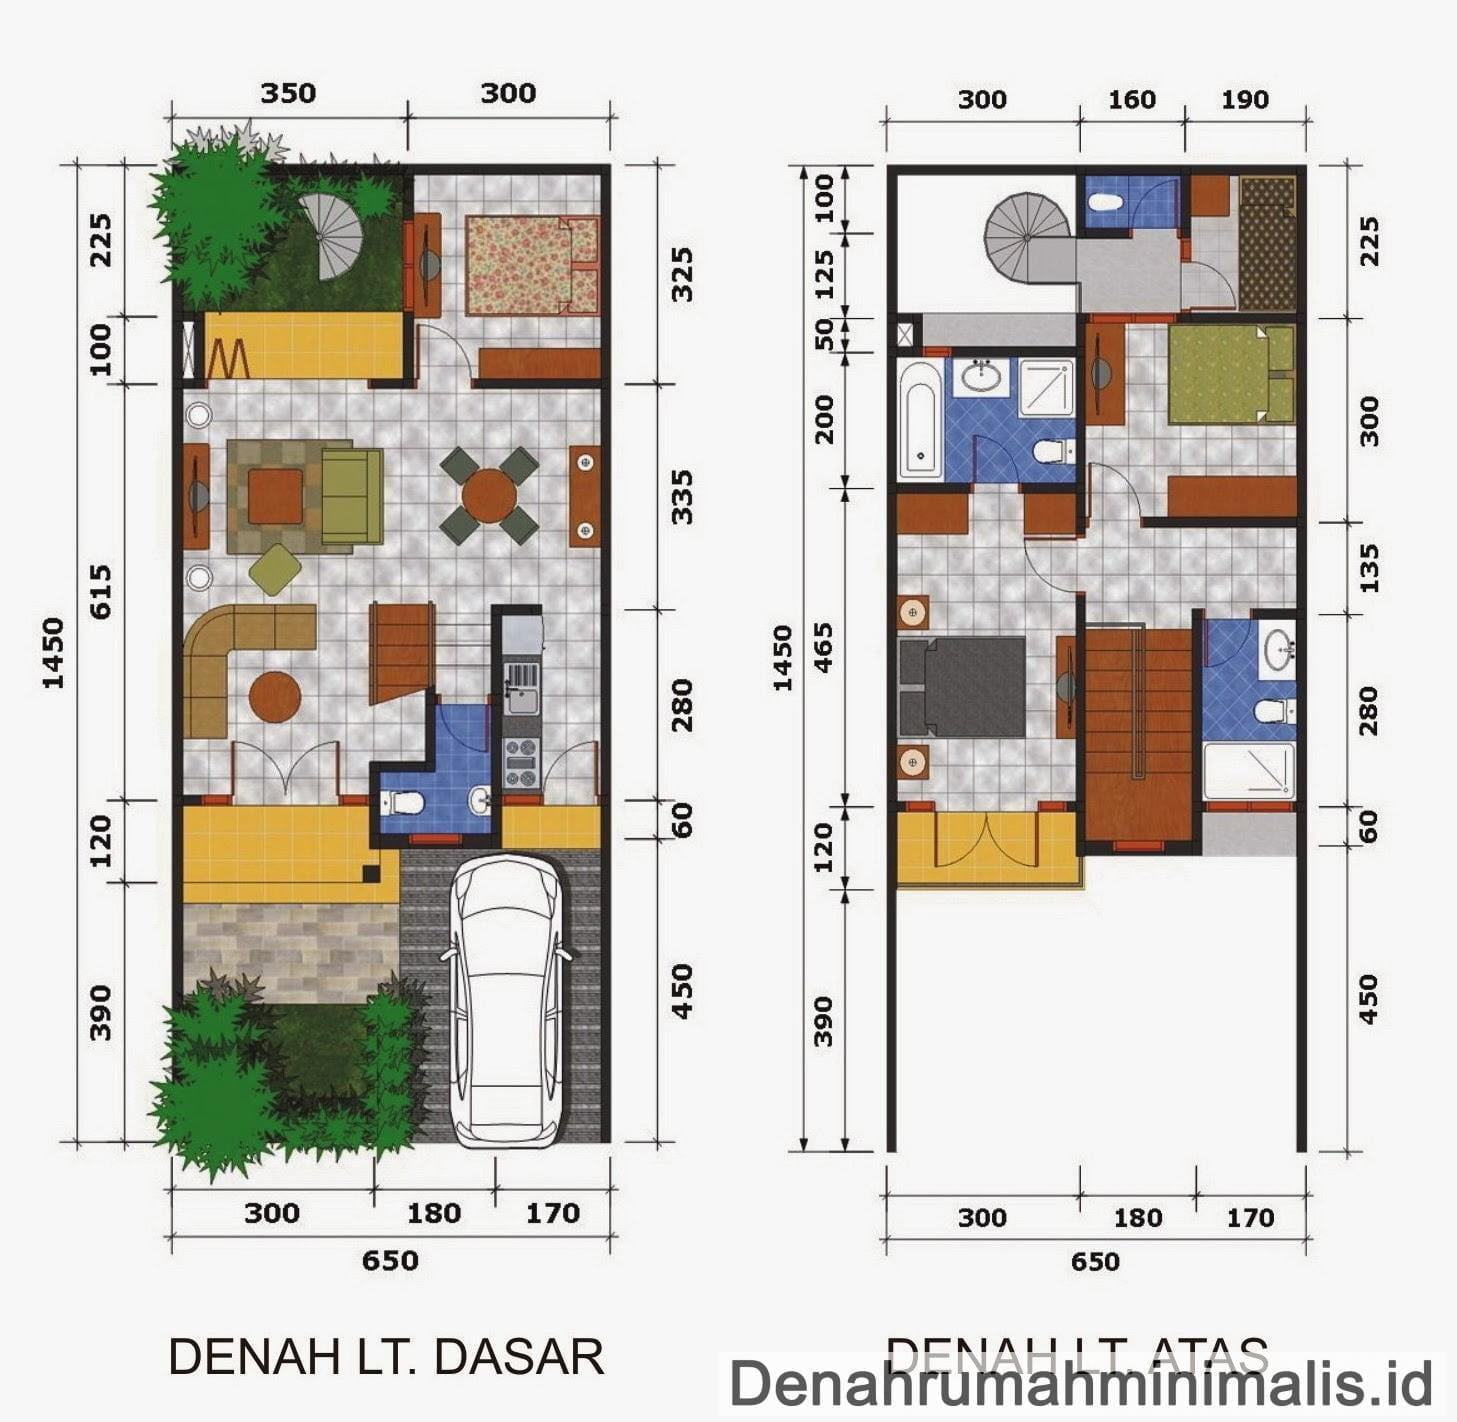 93 Ide Desain Rumah Minimalis 2 Lantai Ukuran 4x10 Yang Wajib Kamu